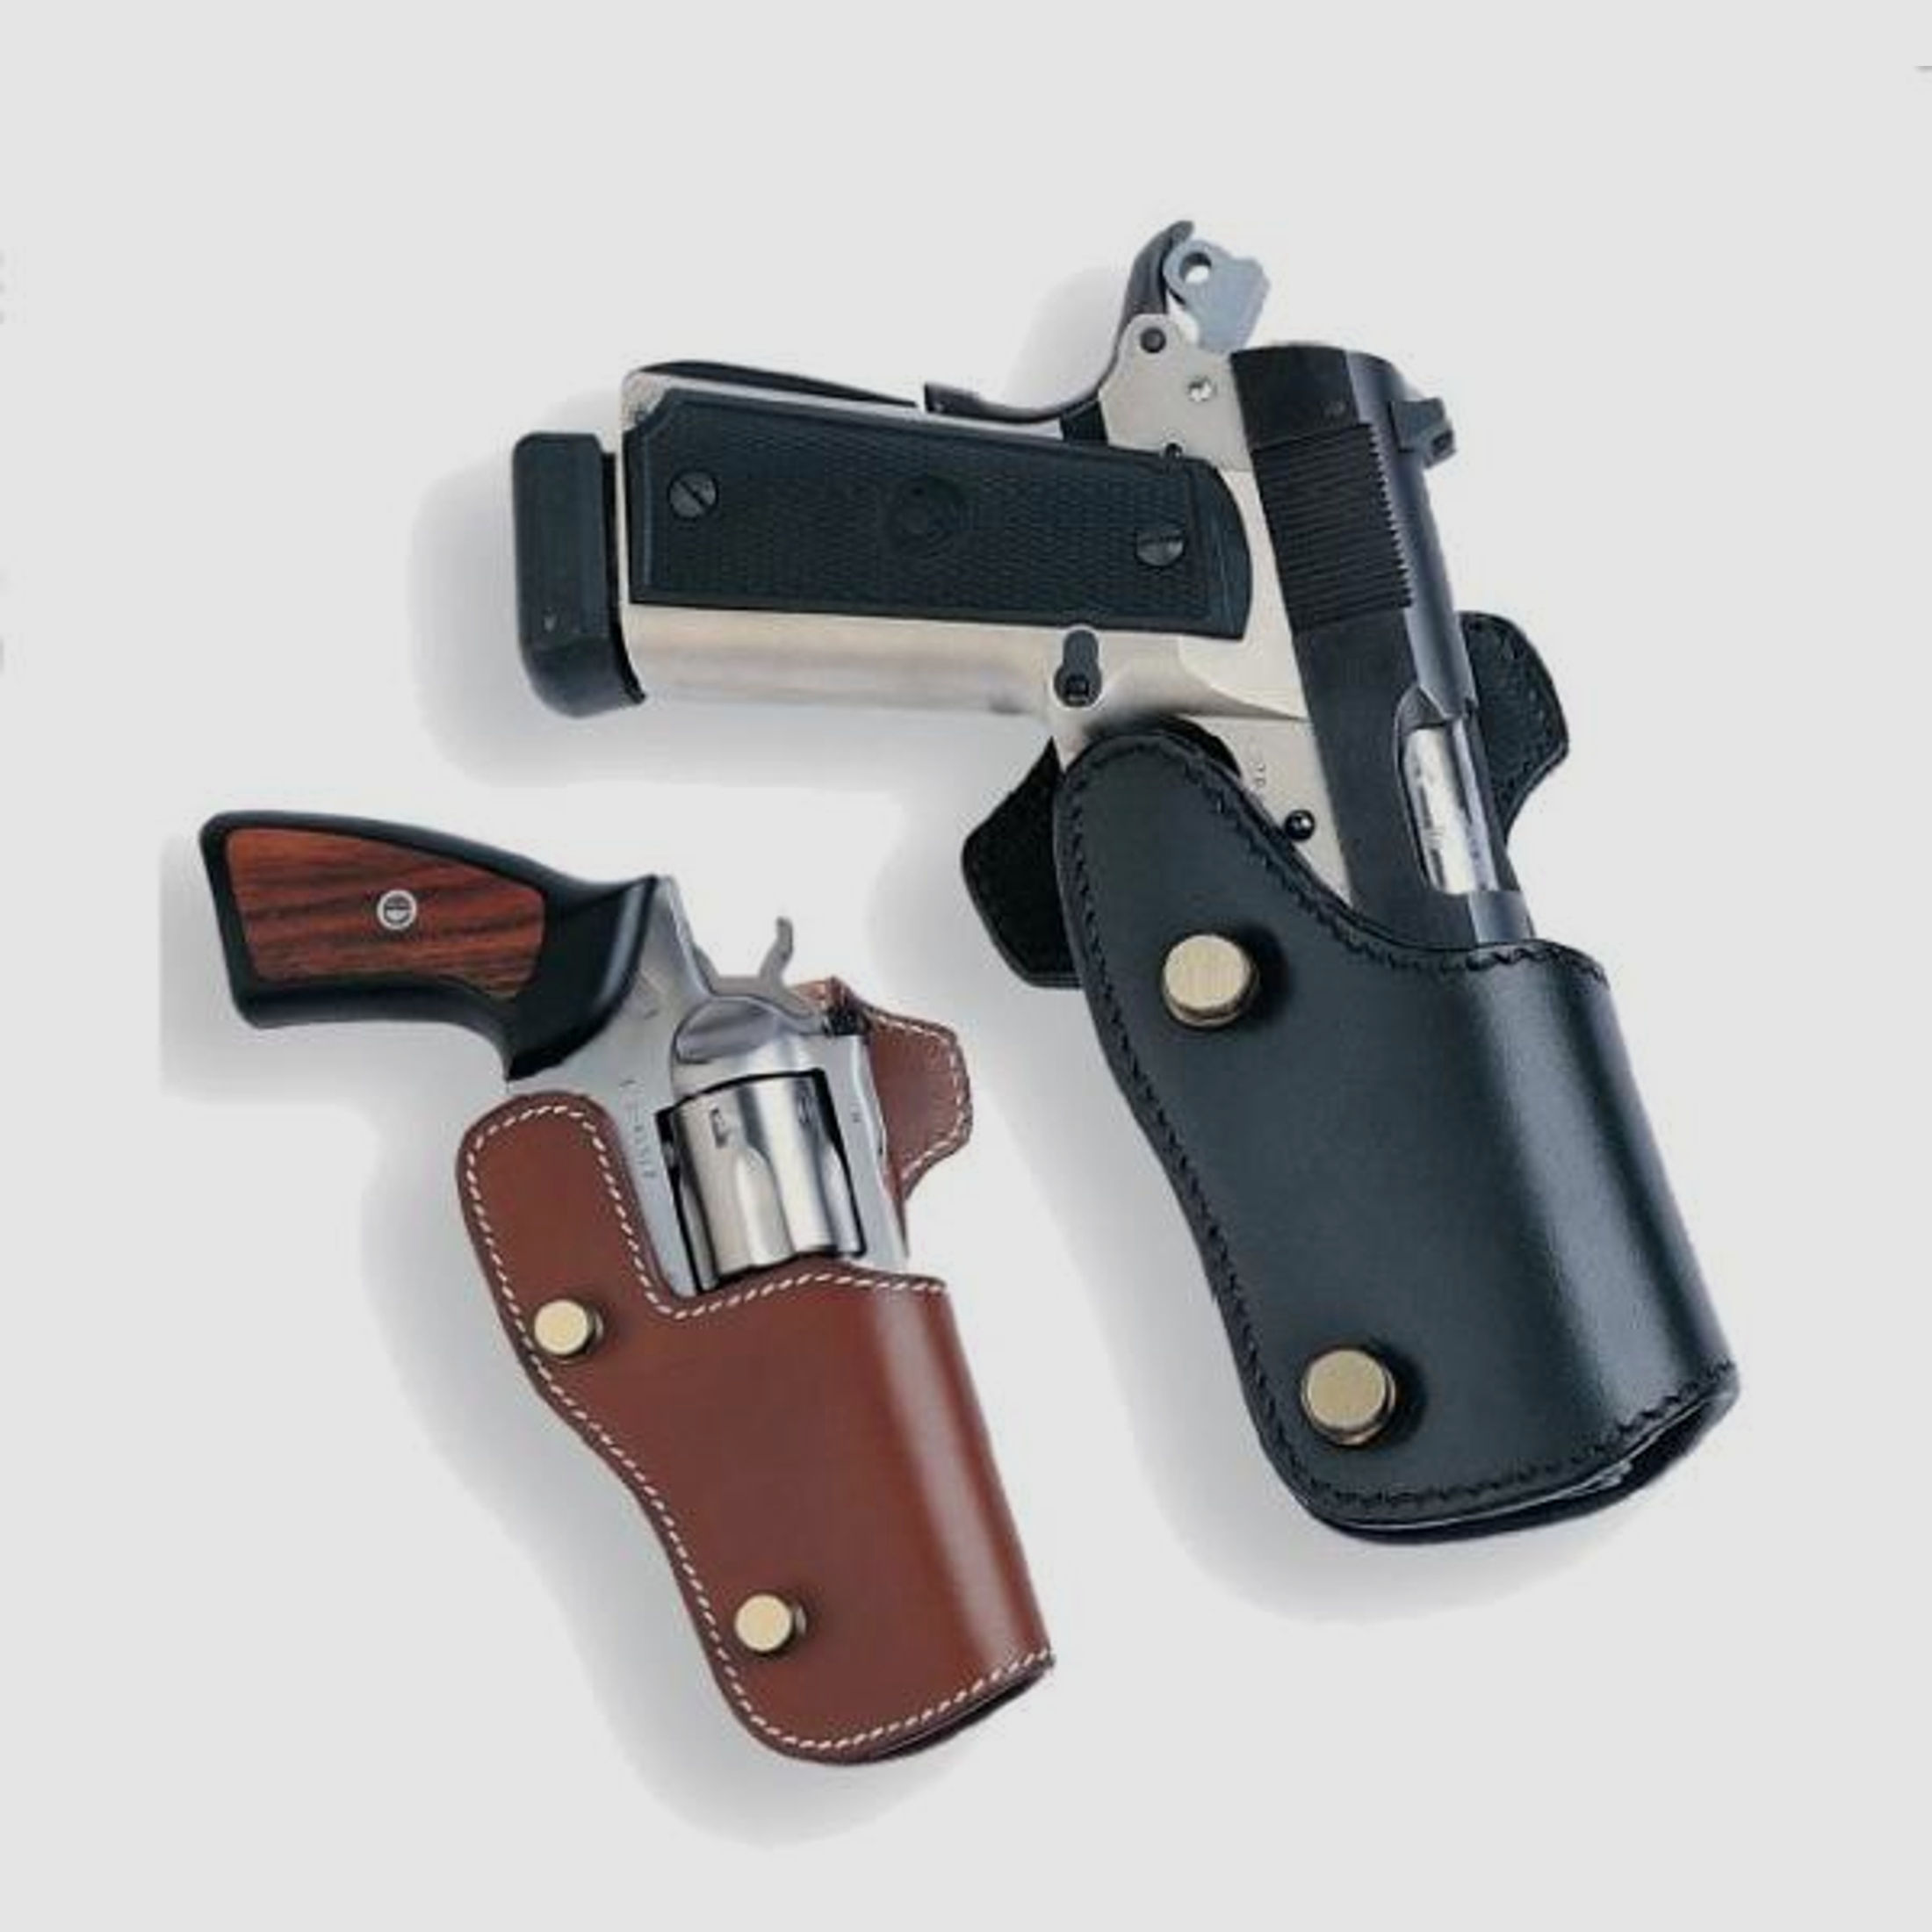 SICKINGER Holster (Wettkampf) f. Glock 19/23/25/32/38 62105  -Range Master schwarz